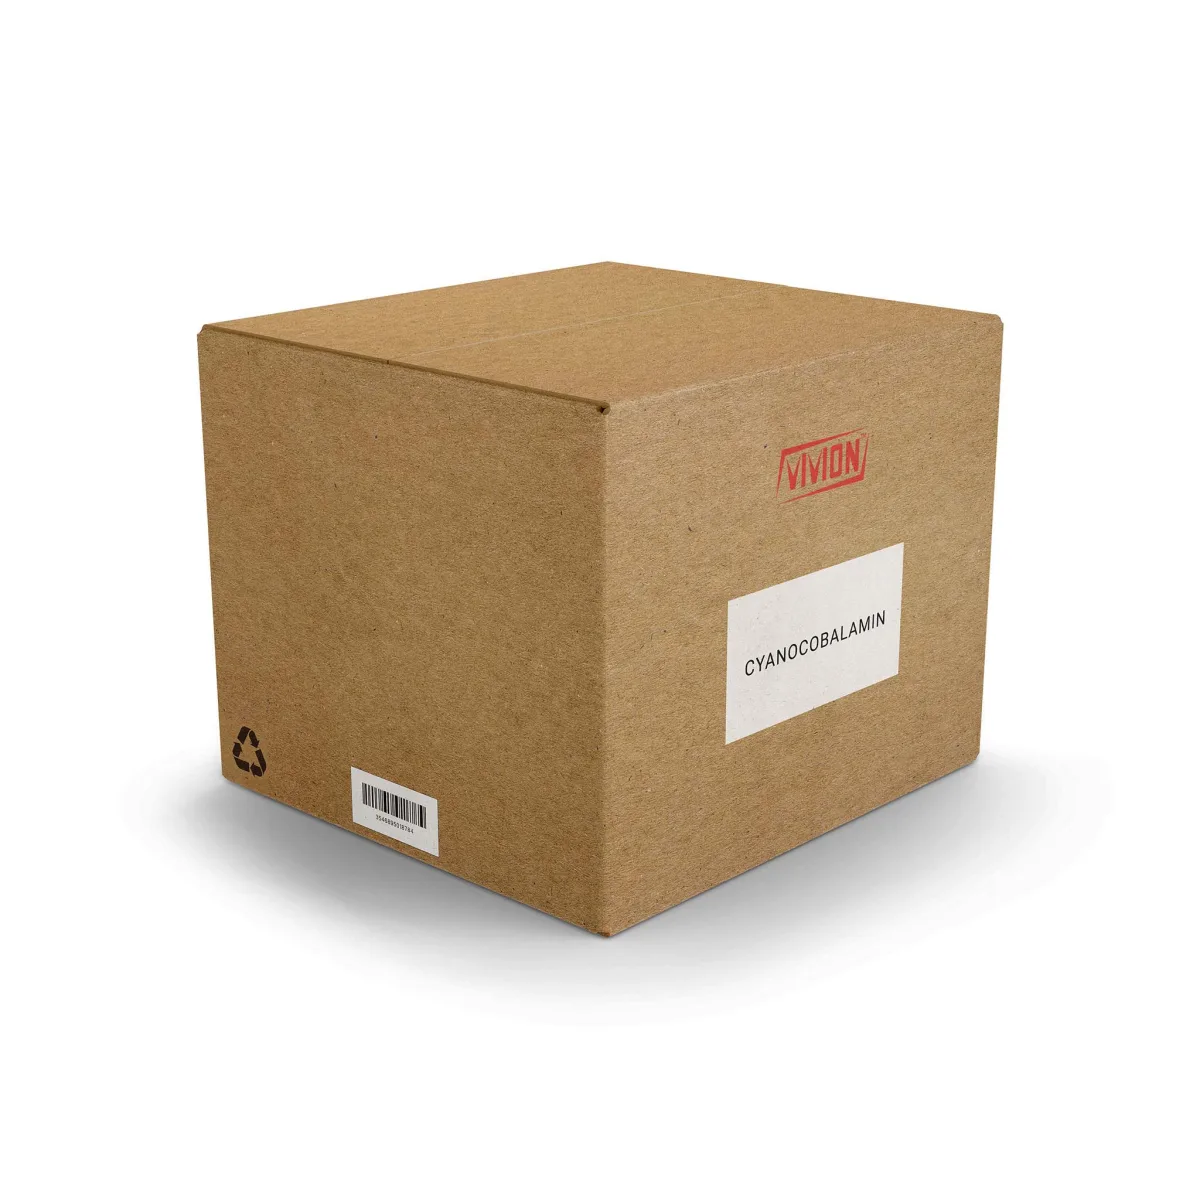 Box of Vivion's wholesale Cyanocobalamin.